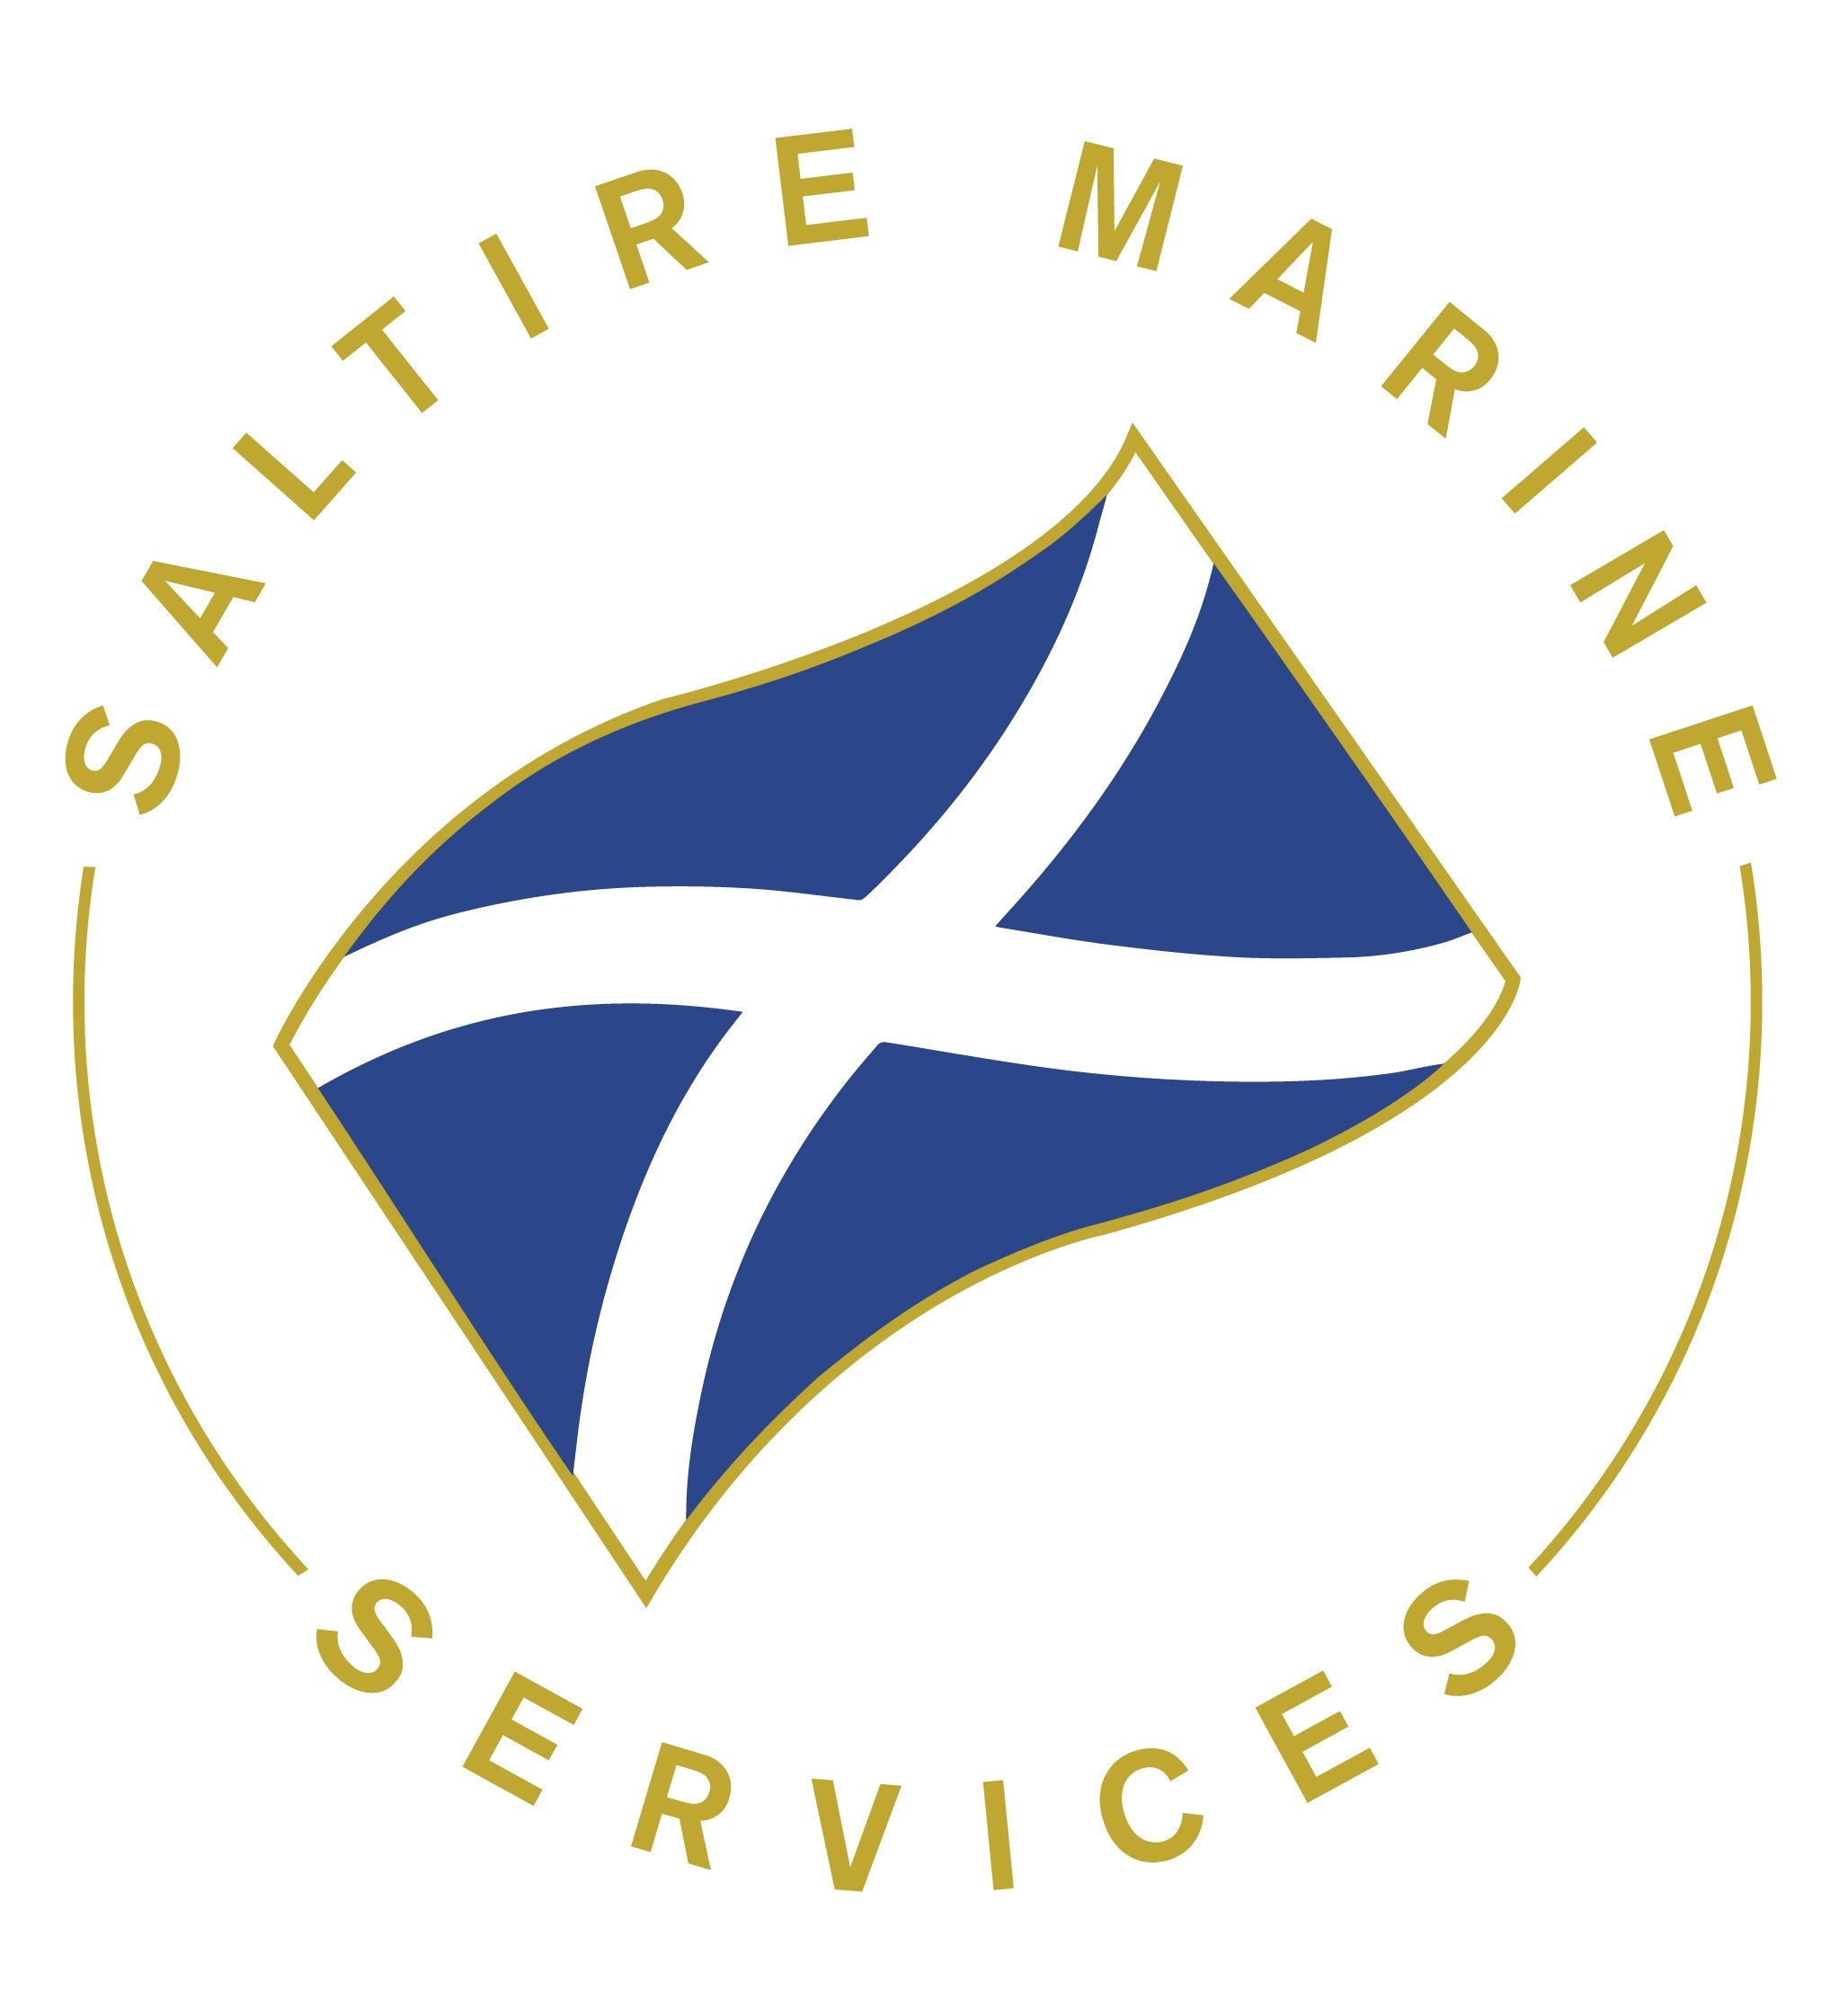 Marine service. Marine co. Saltire лого.